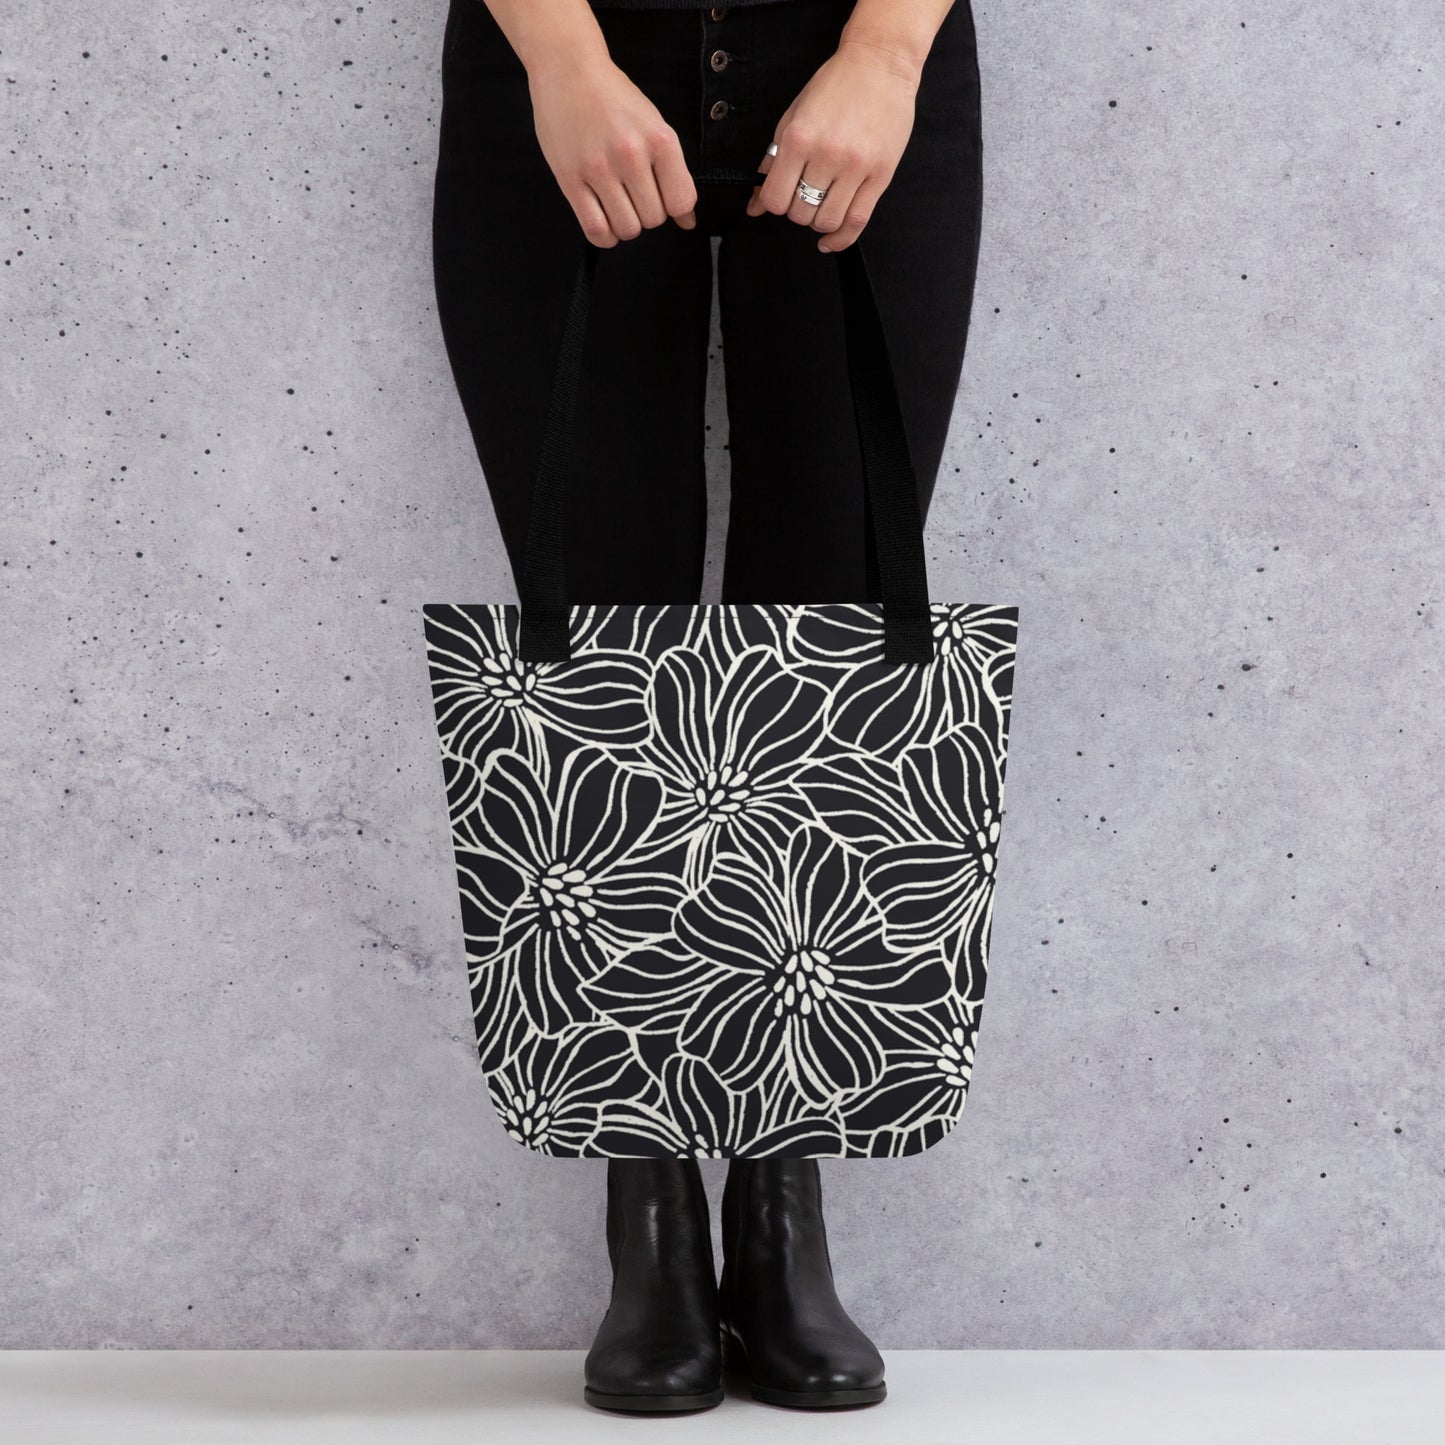 Premium Polyester Tote Bag - B&W Spring Bloom Print